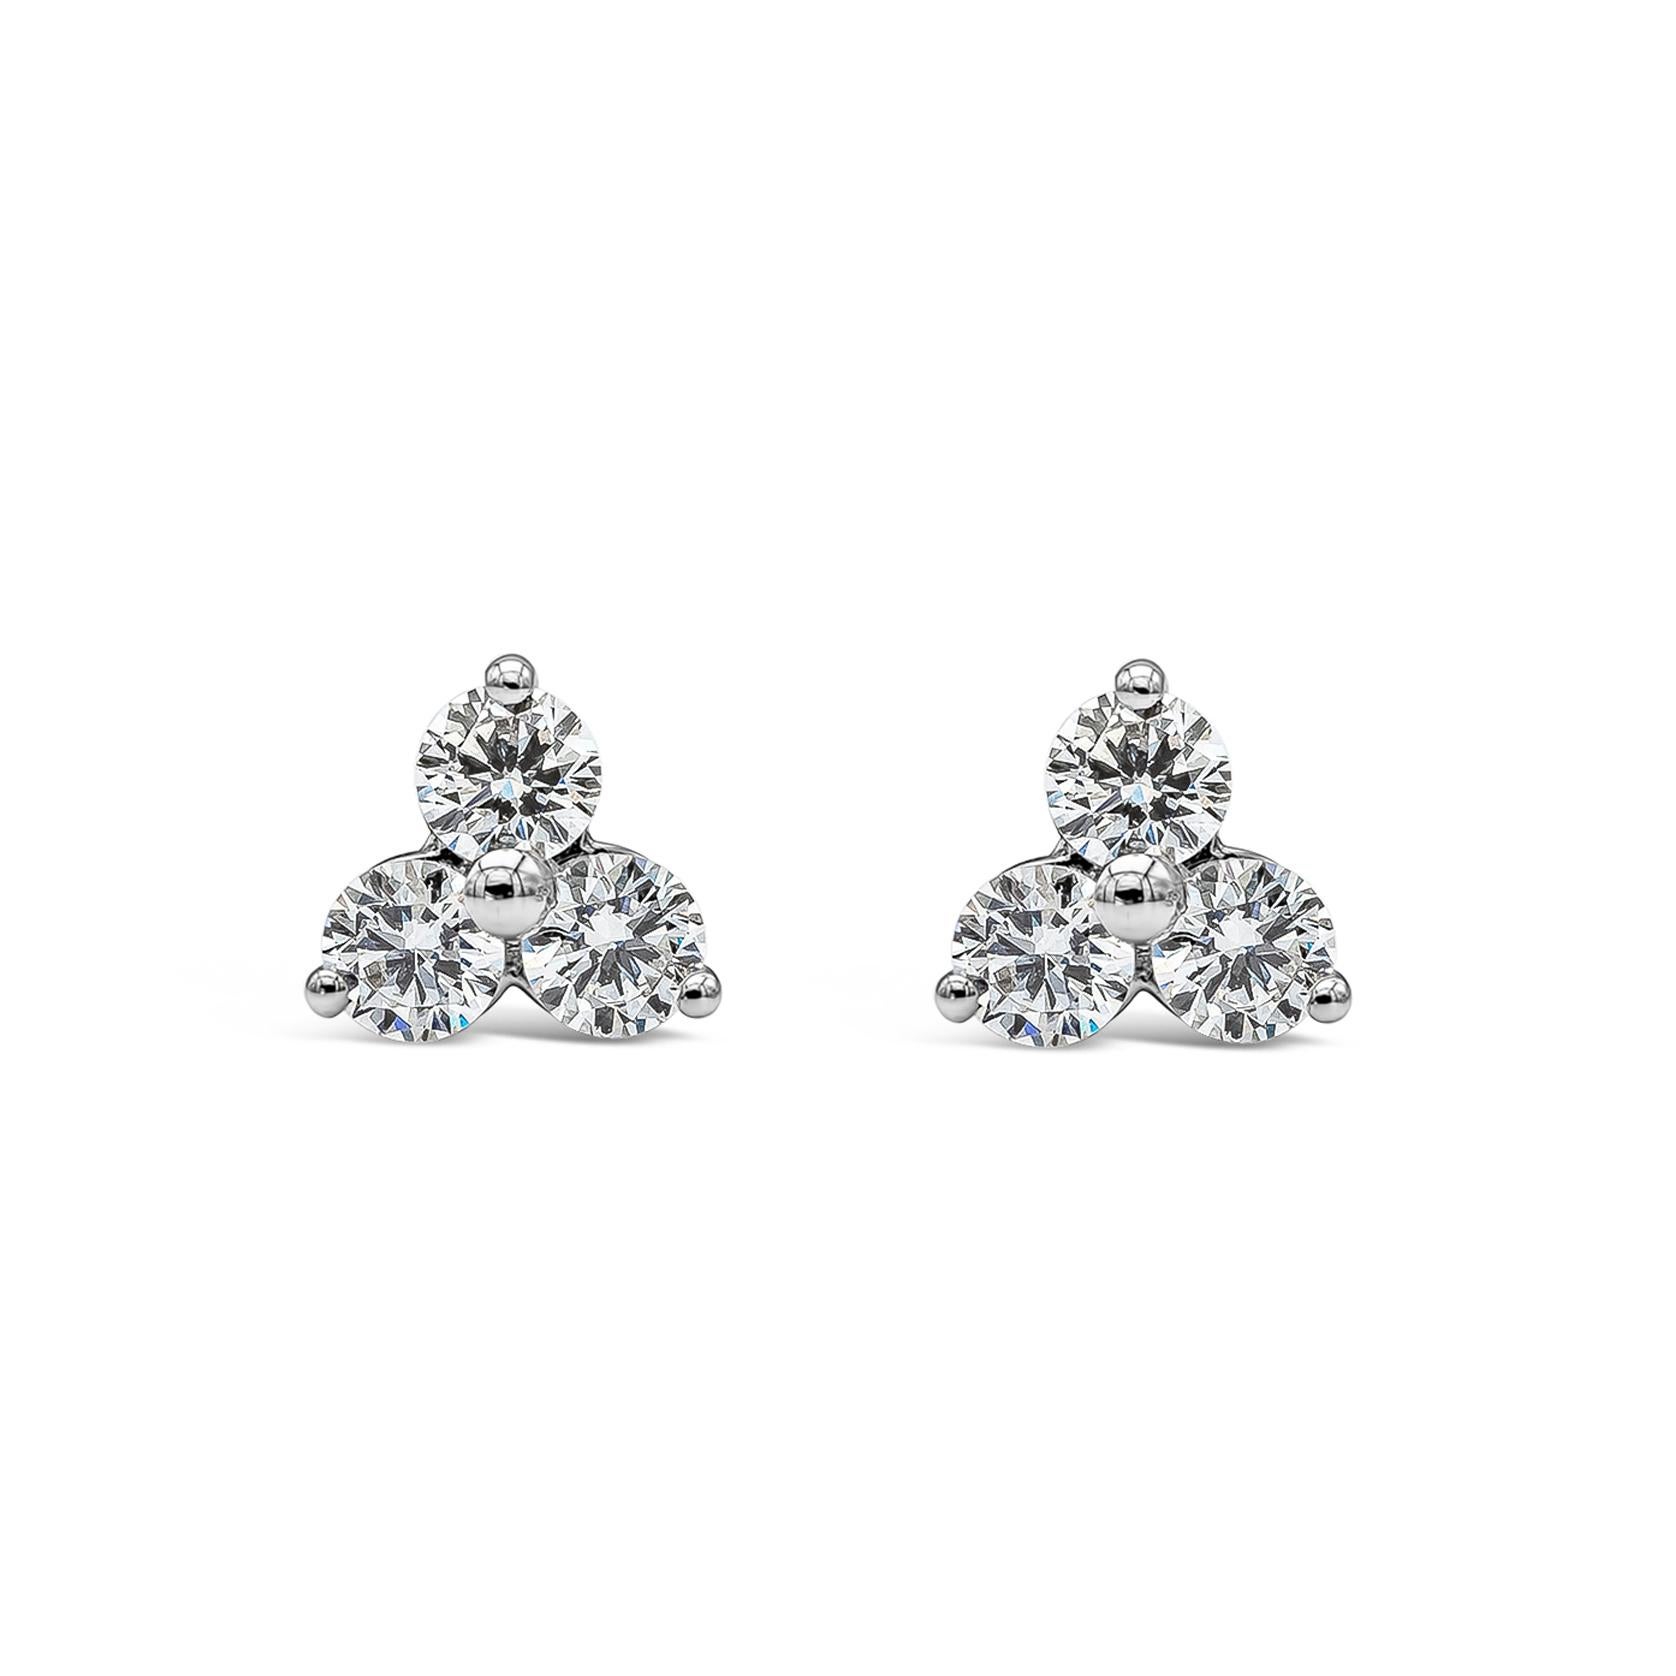 Roman Malakov 0.48 Carats Total Round Shape Diamond Cluster Stud Earrings